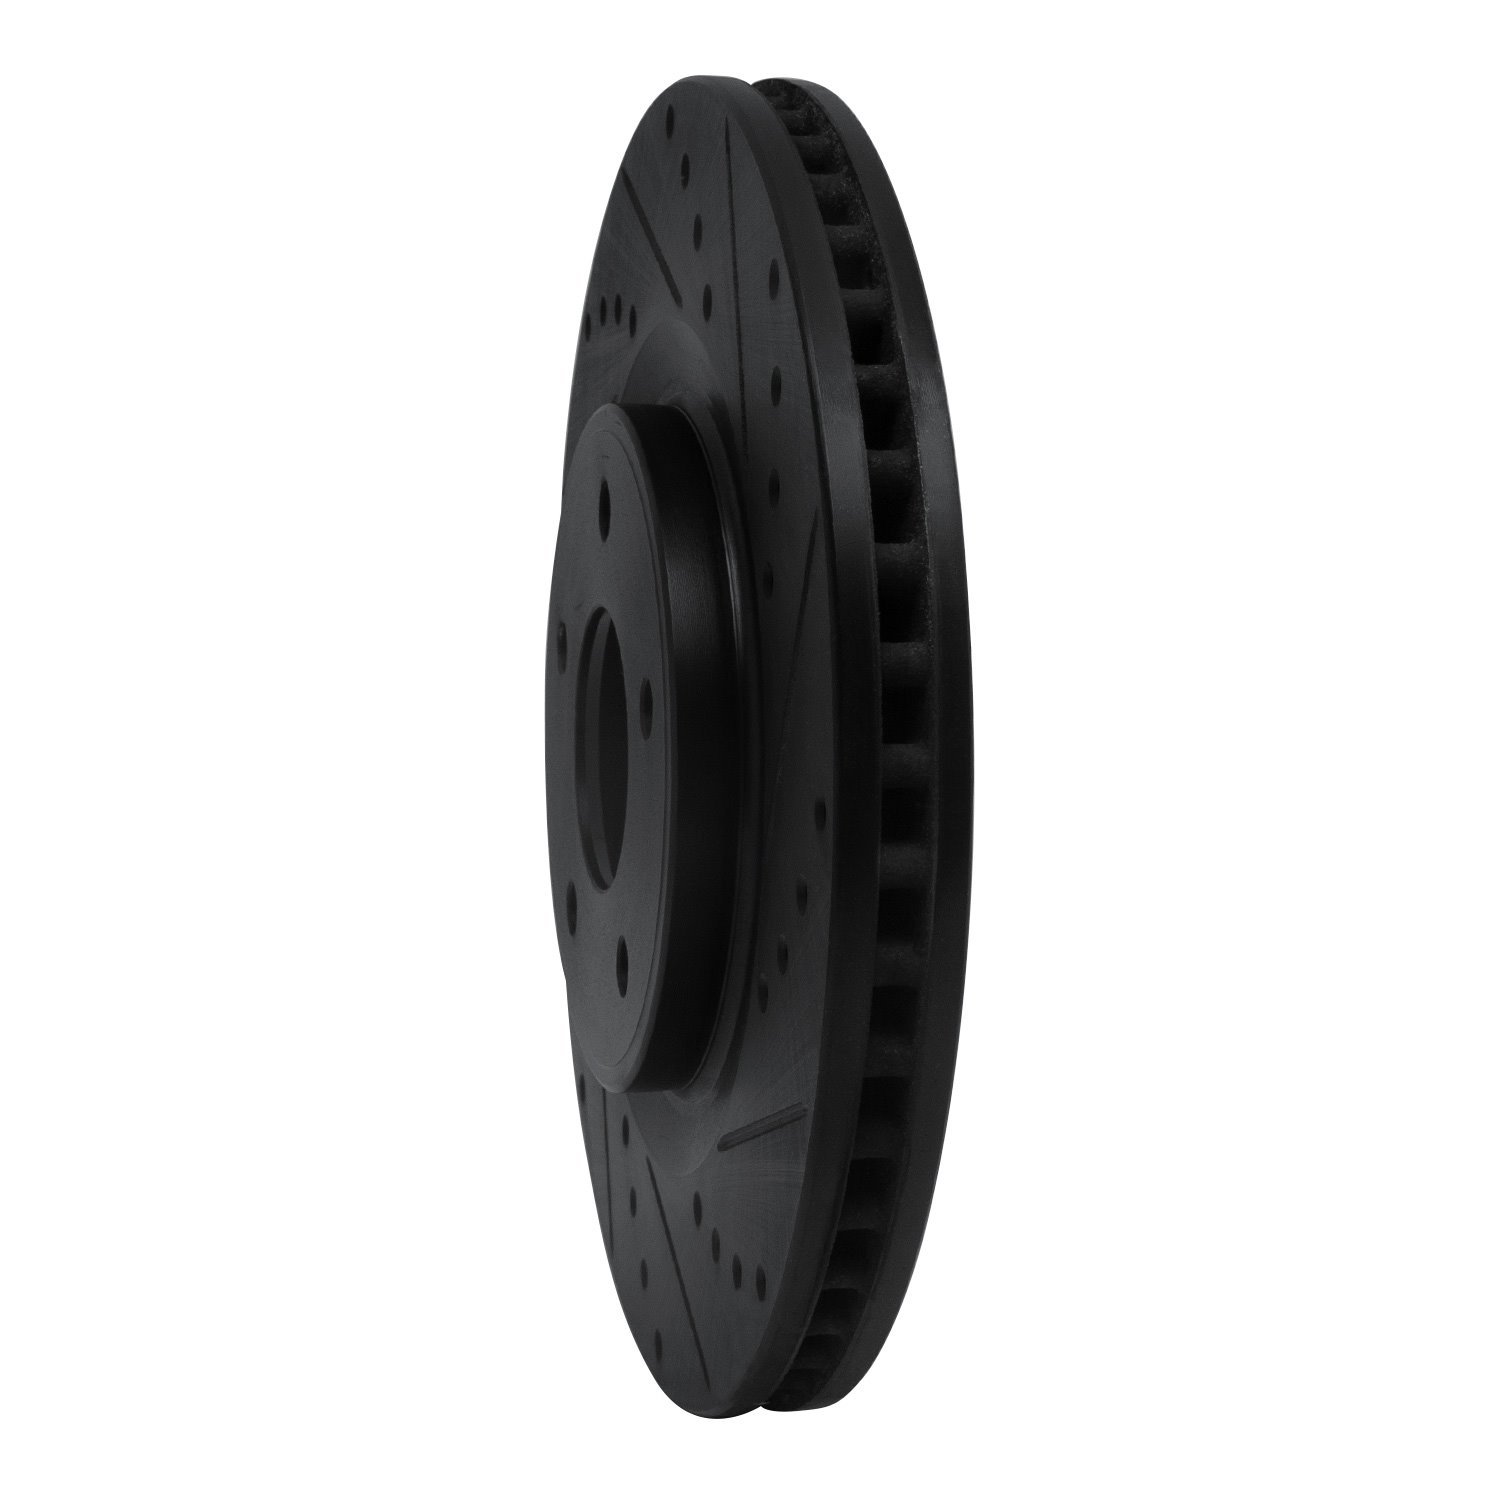 Drilled/Slotted Brake Rotor [Black], 2014-2019 Infiniti/Nissan